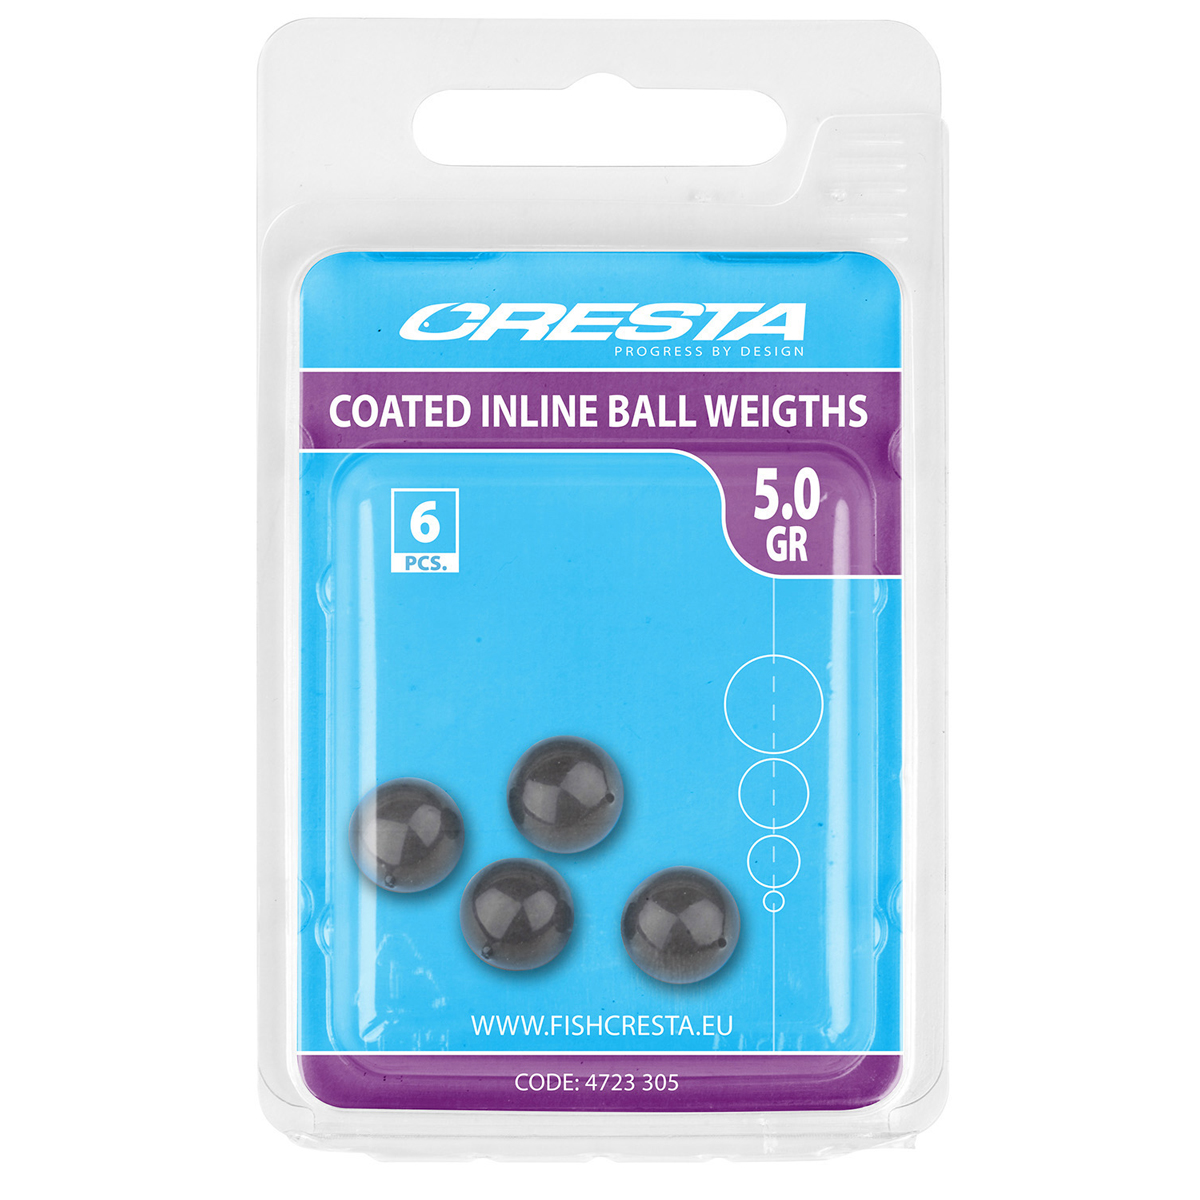 Cresta Coated Inline Ball Weights